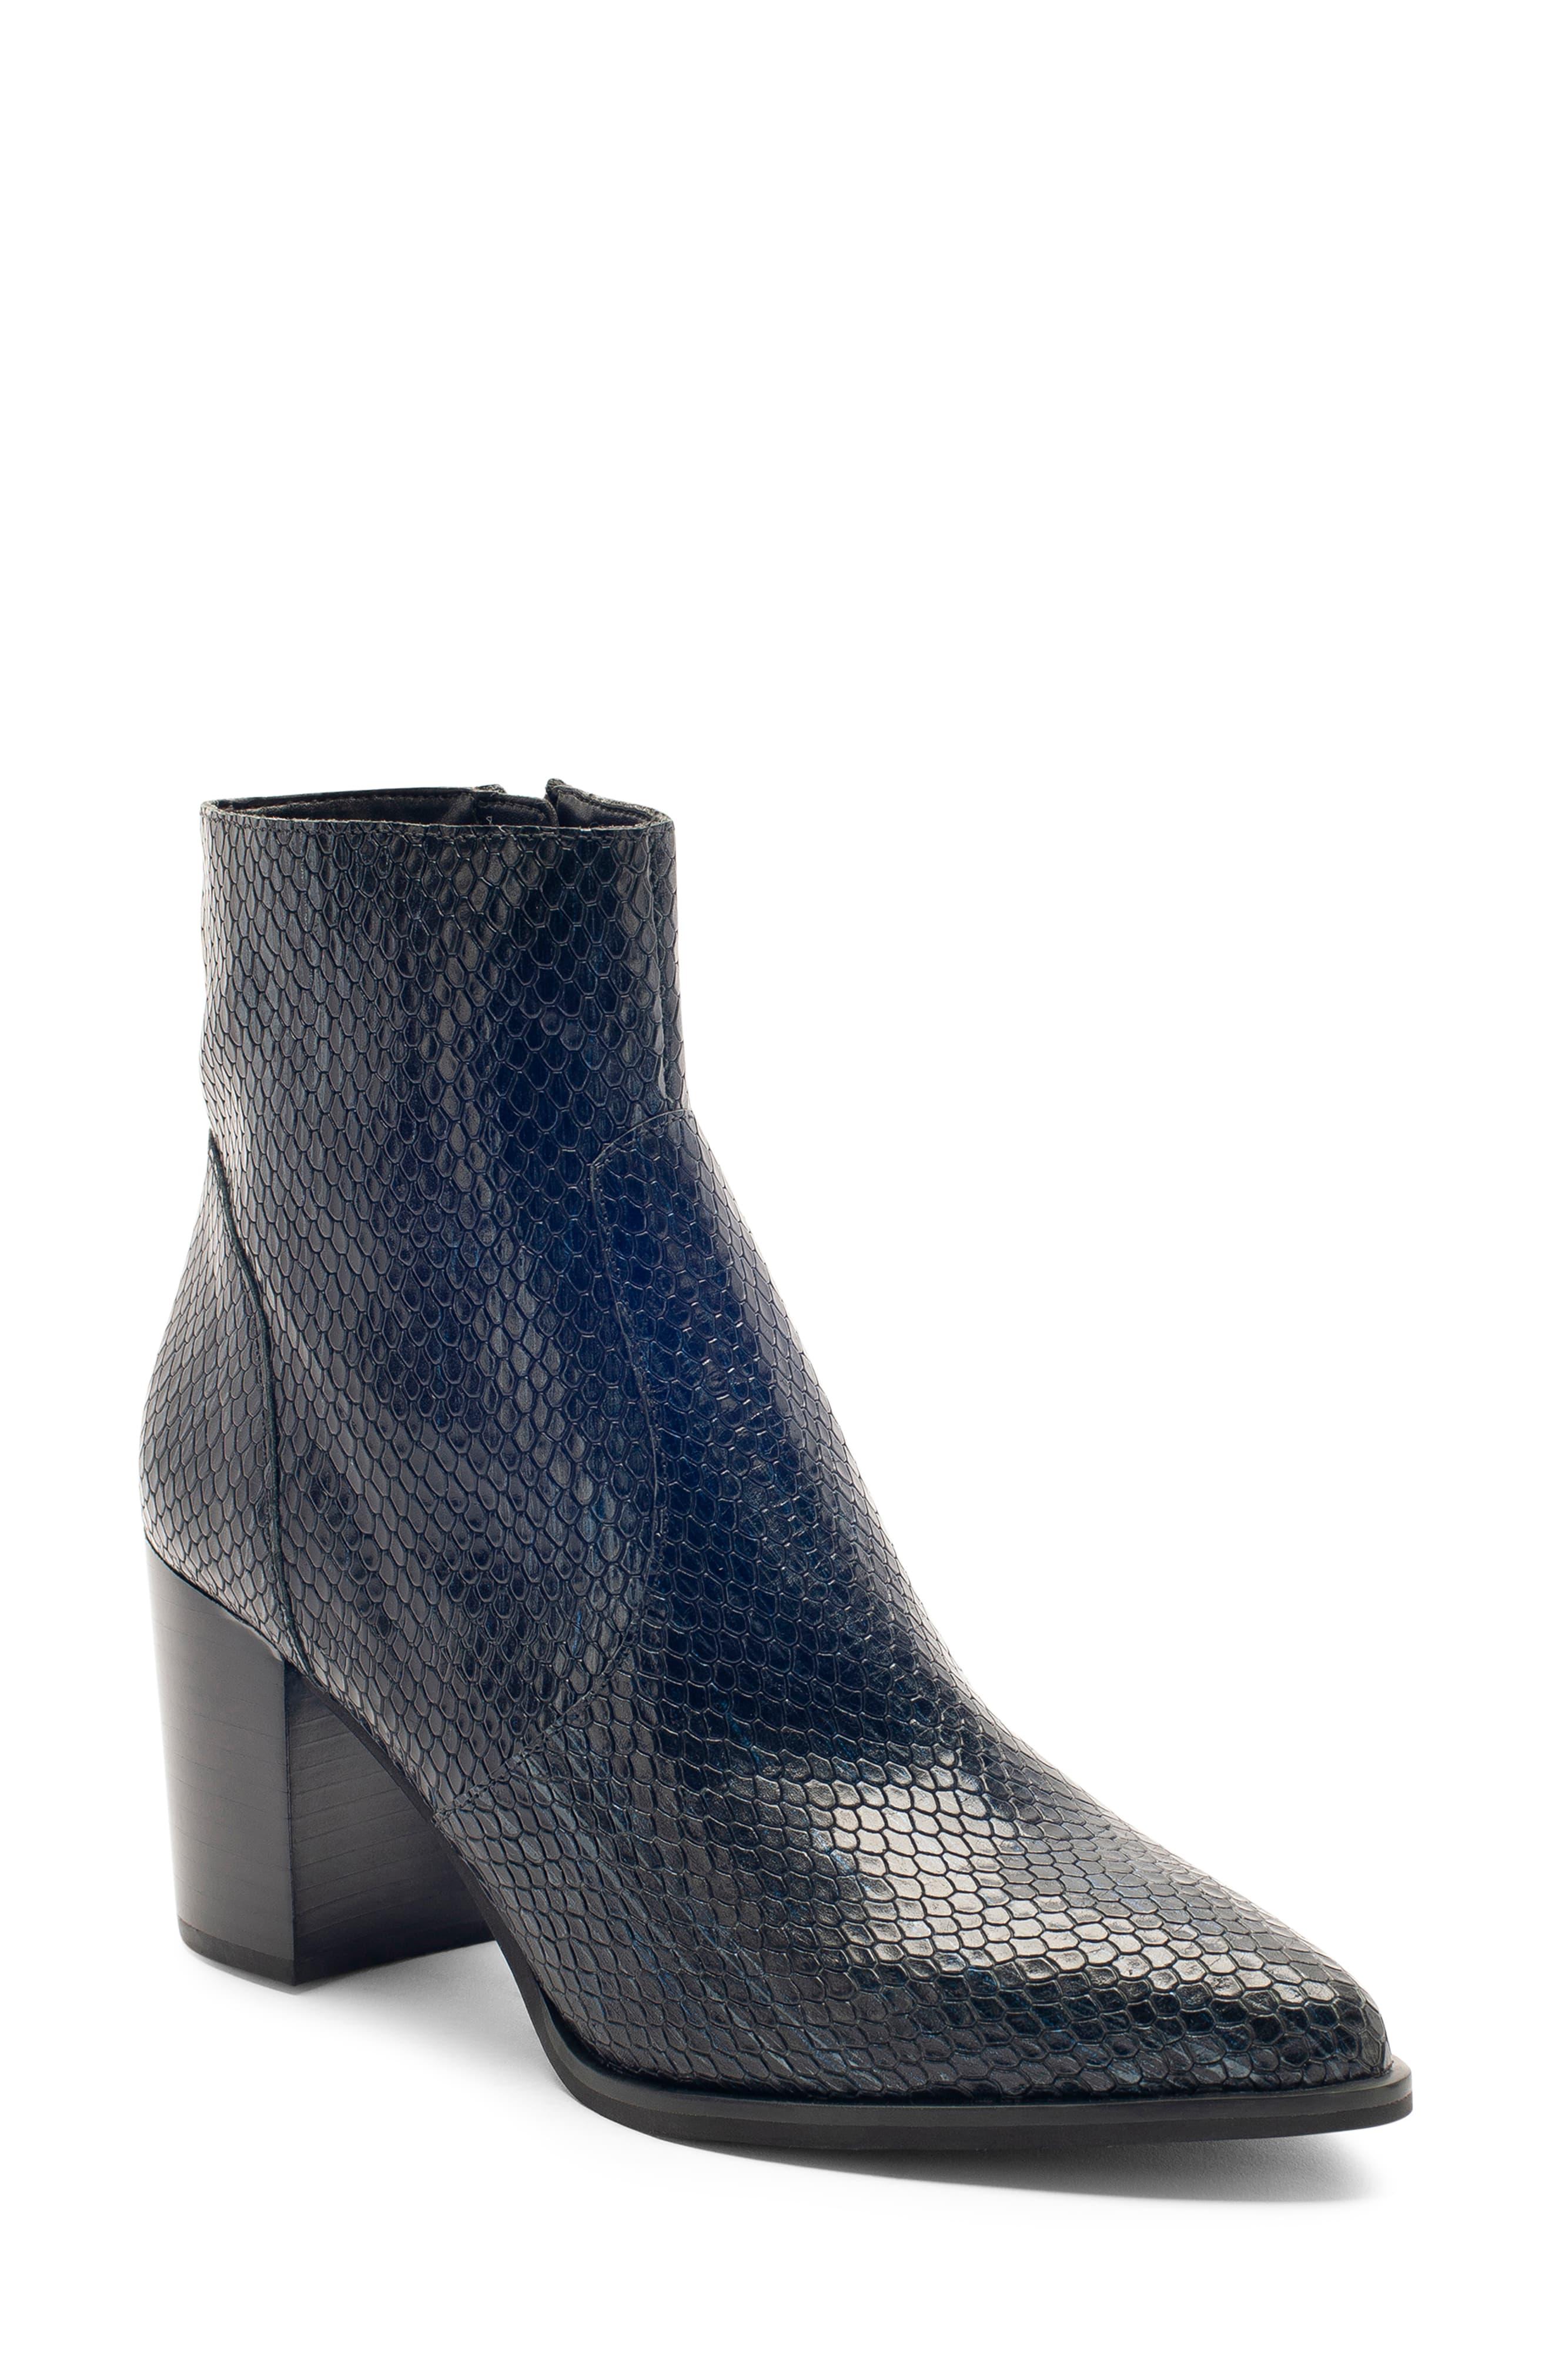 Blondo Tania Waterproof Bootie in Black Snake Leather (Blue) - Save 1% ...